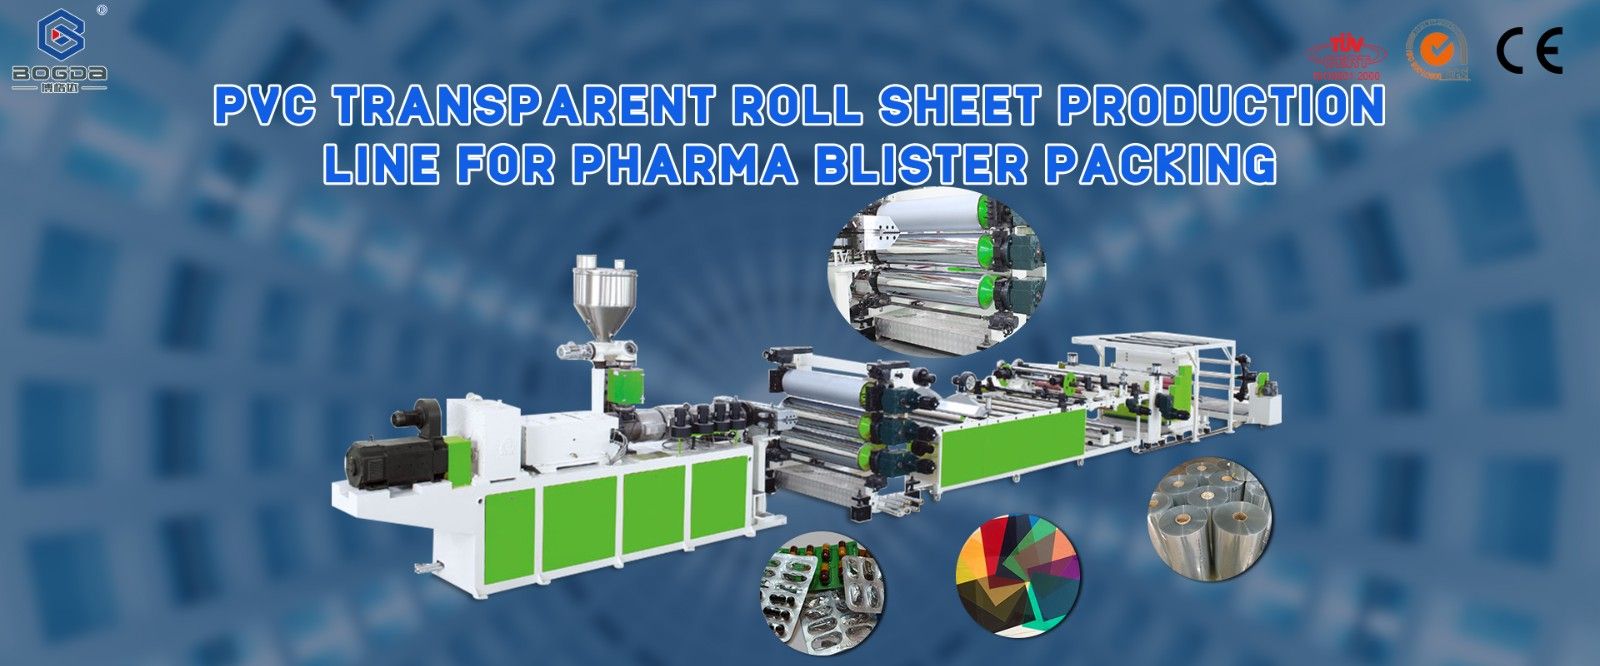 PVC Transparent Roll Sheet Production Line for pharma blister packing